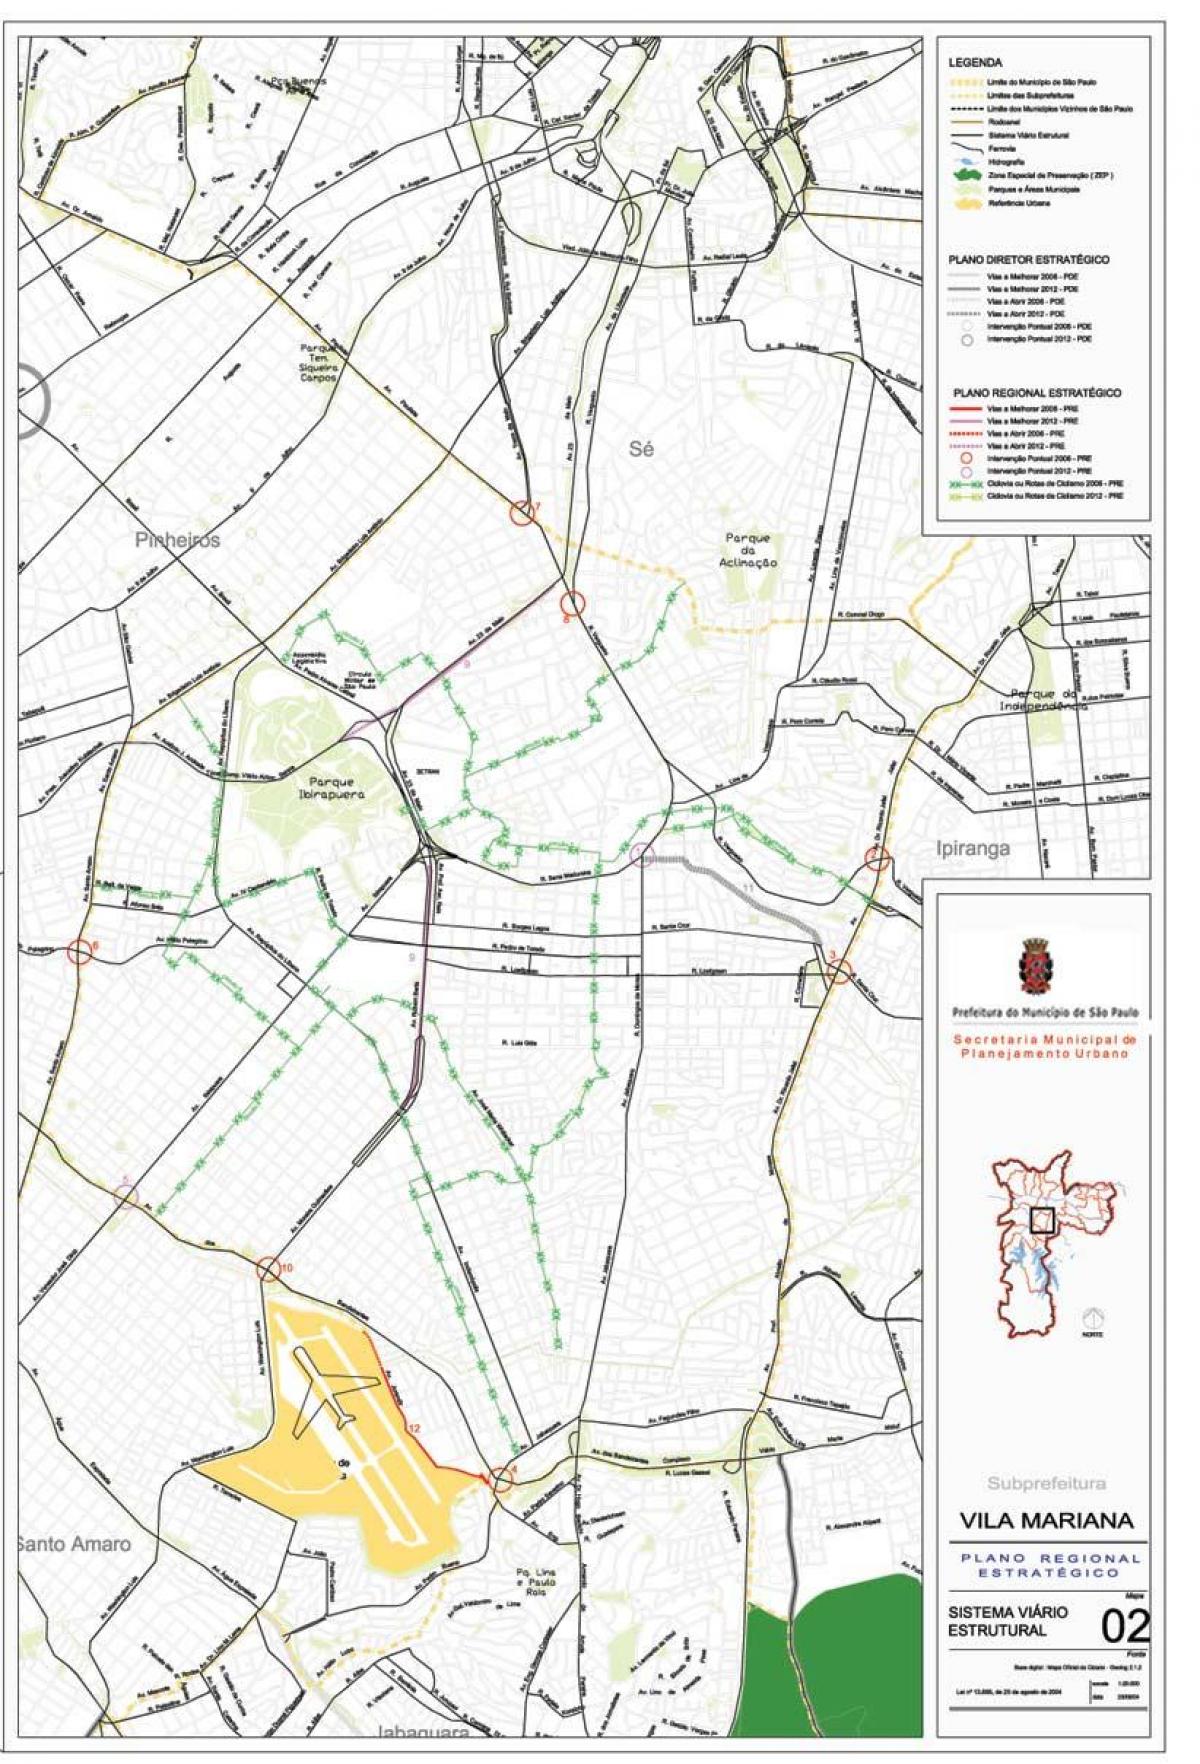 Zemljevid Vila Marianski Sao Paulo - Ceste